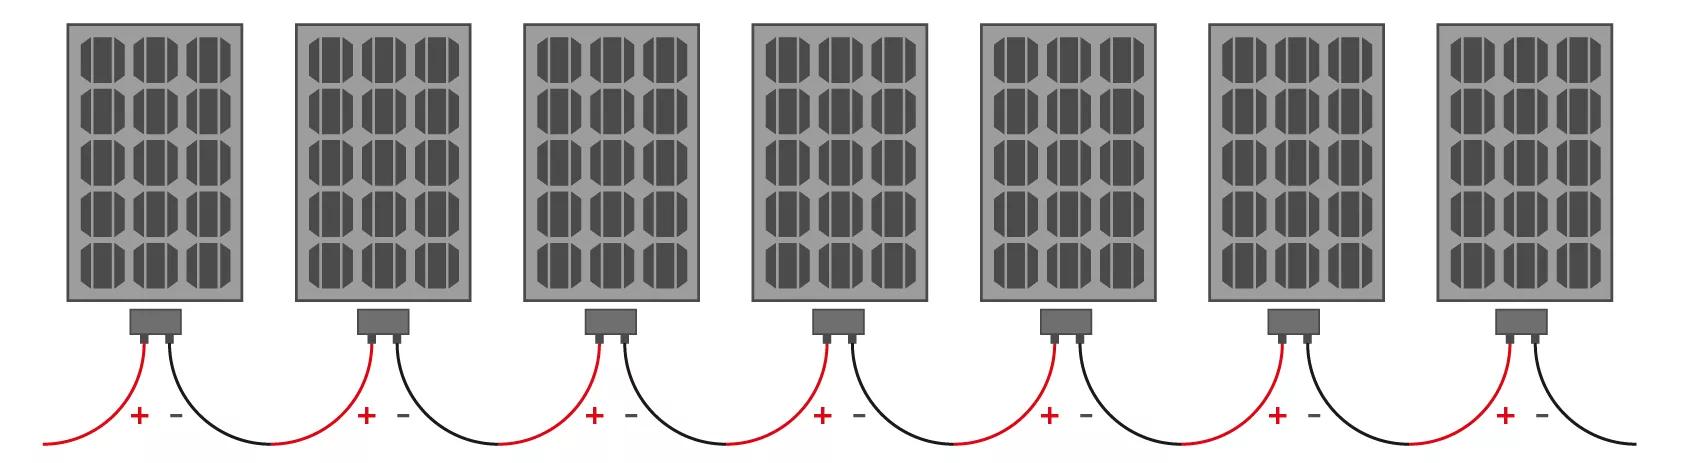 6554_Essentra_SolarPV Diagrams 1_1 (JH)_Solar panels in series.jpg